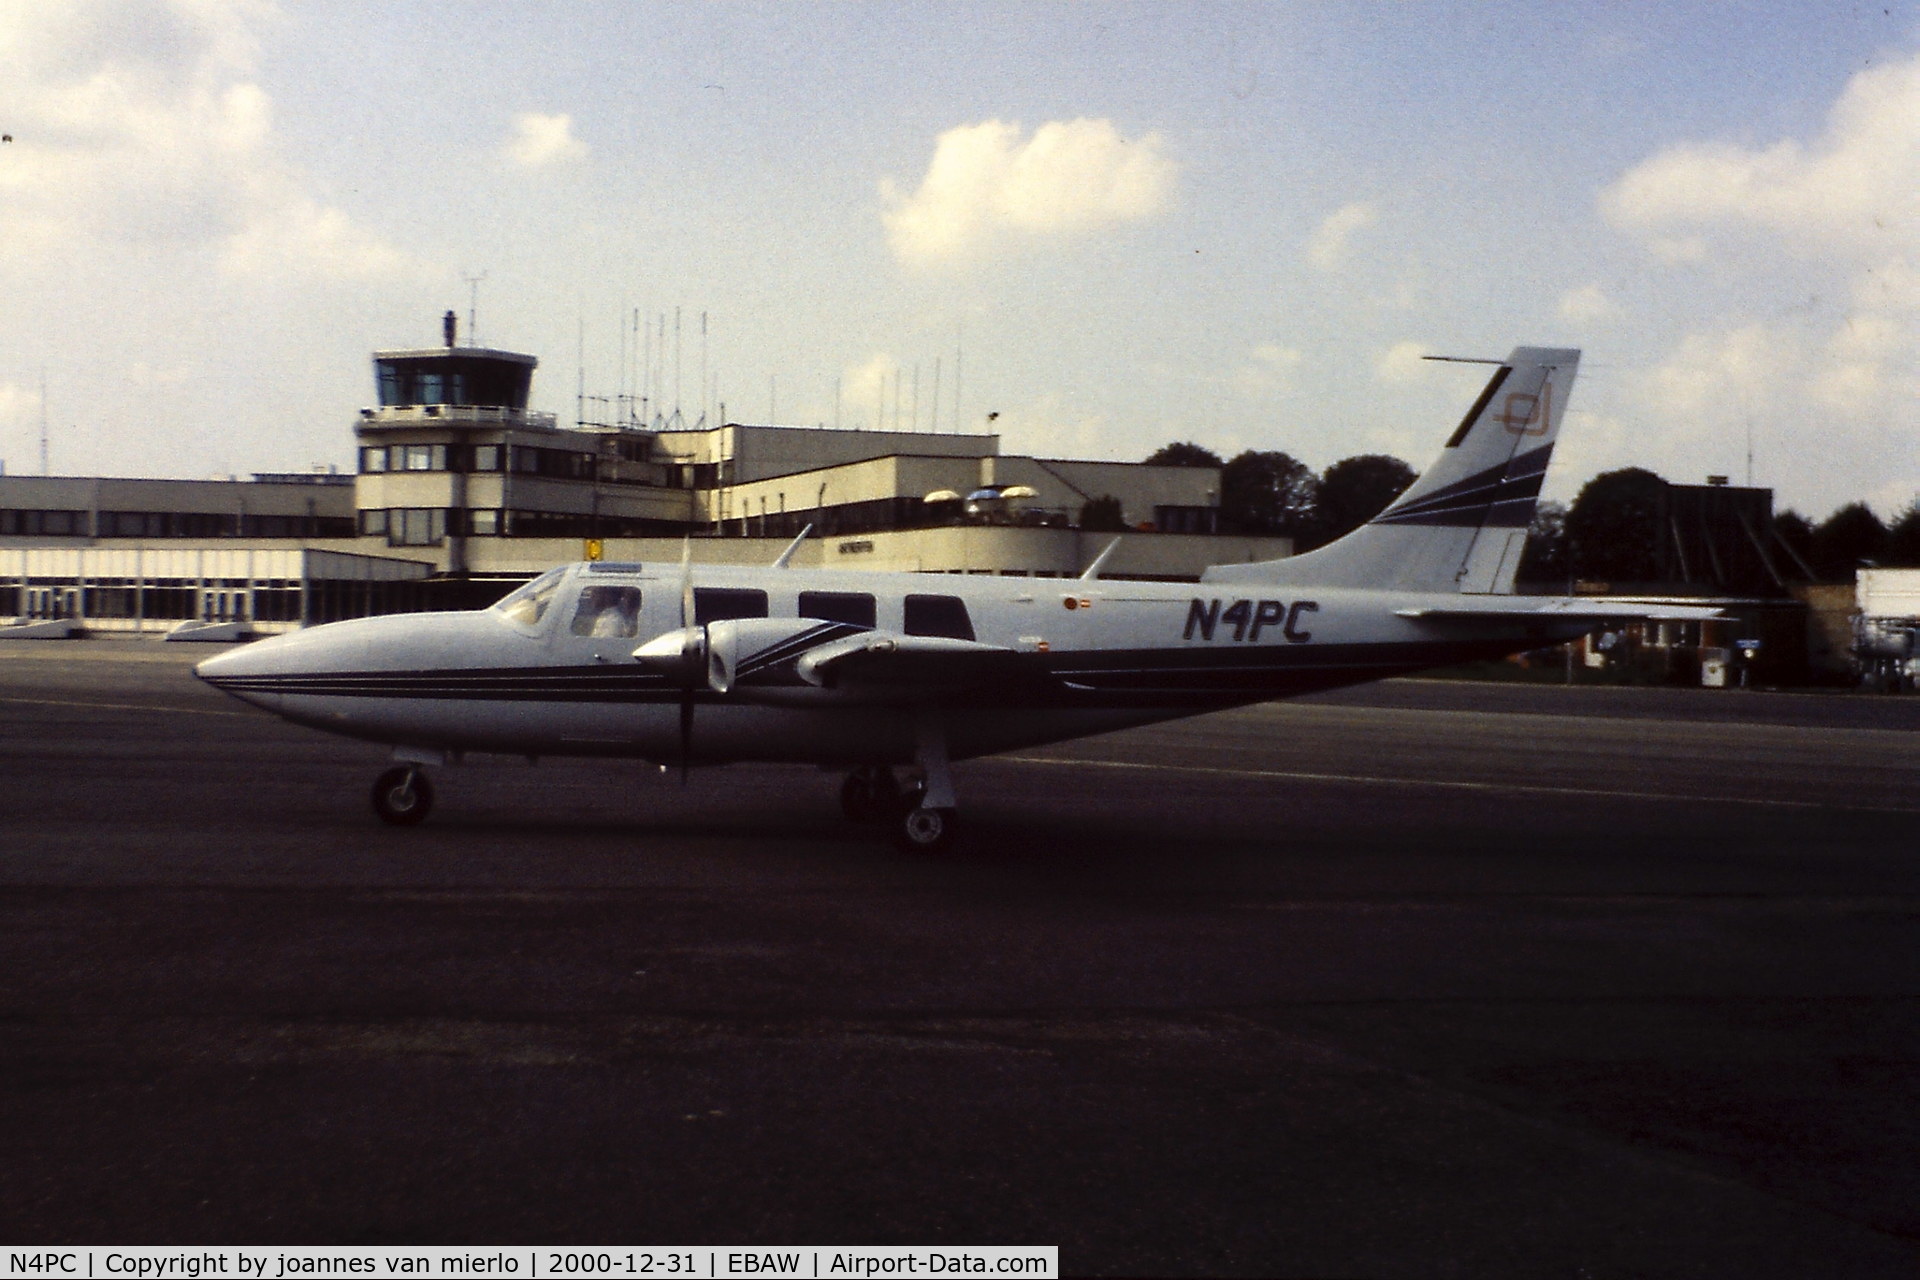 N4PC, 1980 Piper Aerostar 601P C/N 61P07438063365, Antwerp, a/c w/o mid air collision june'90